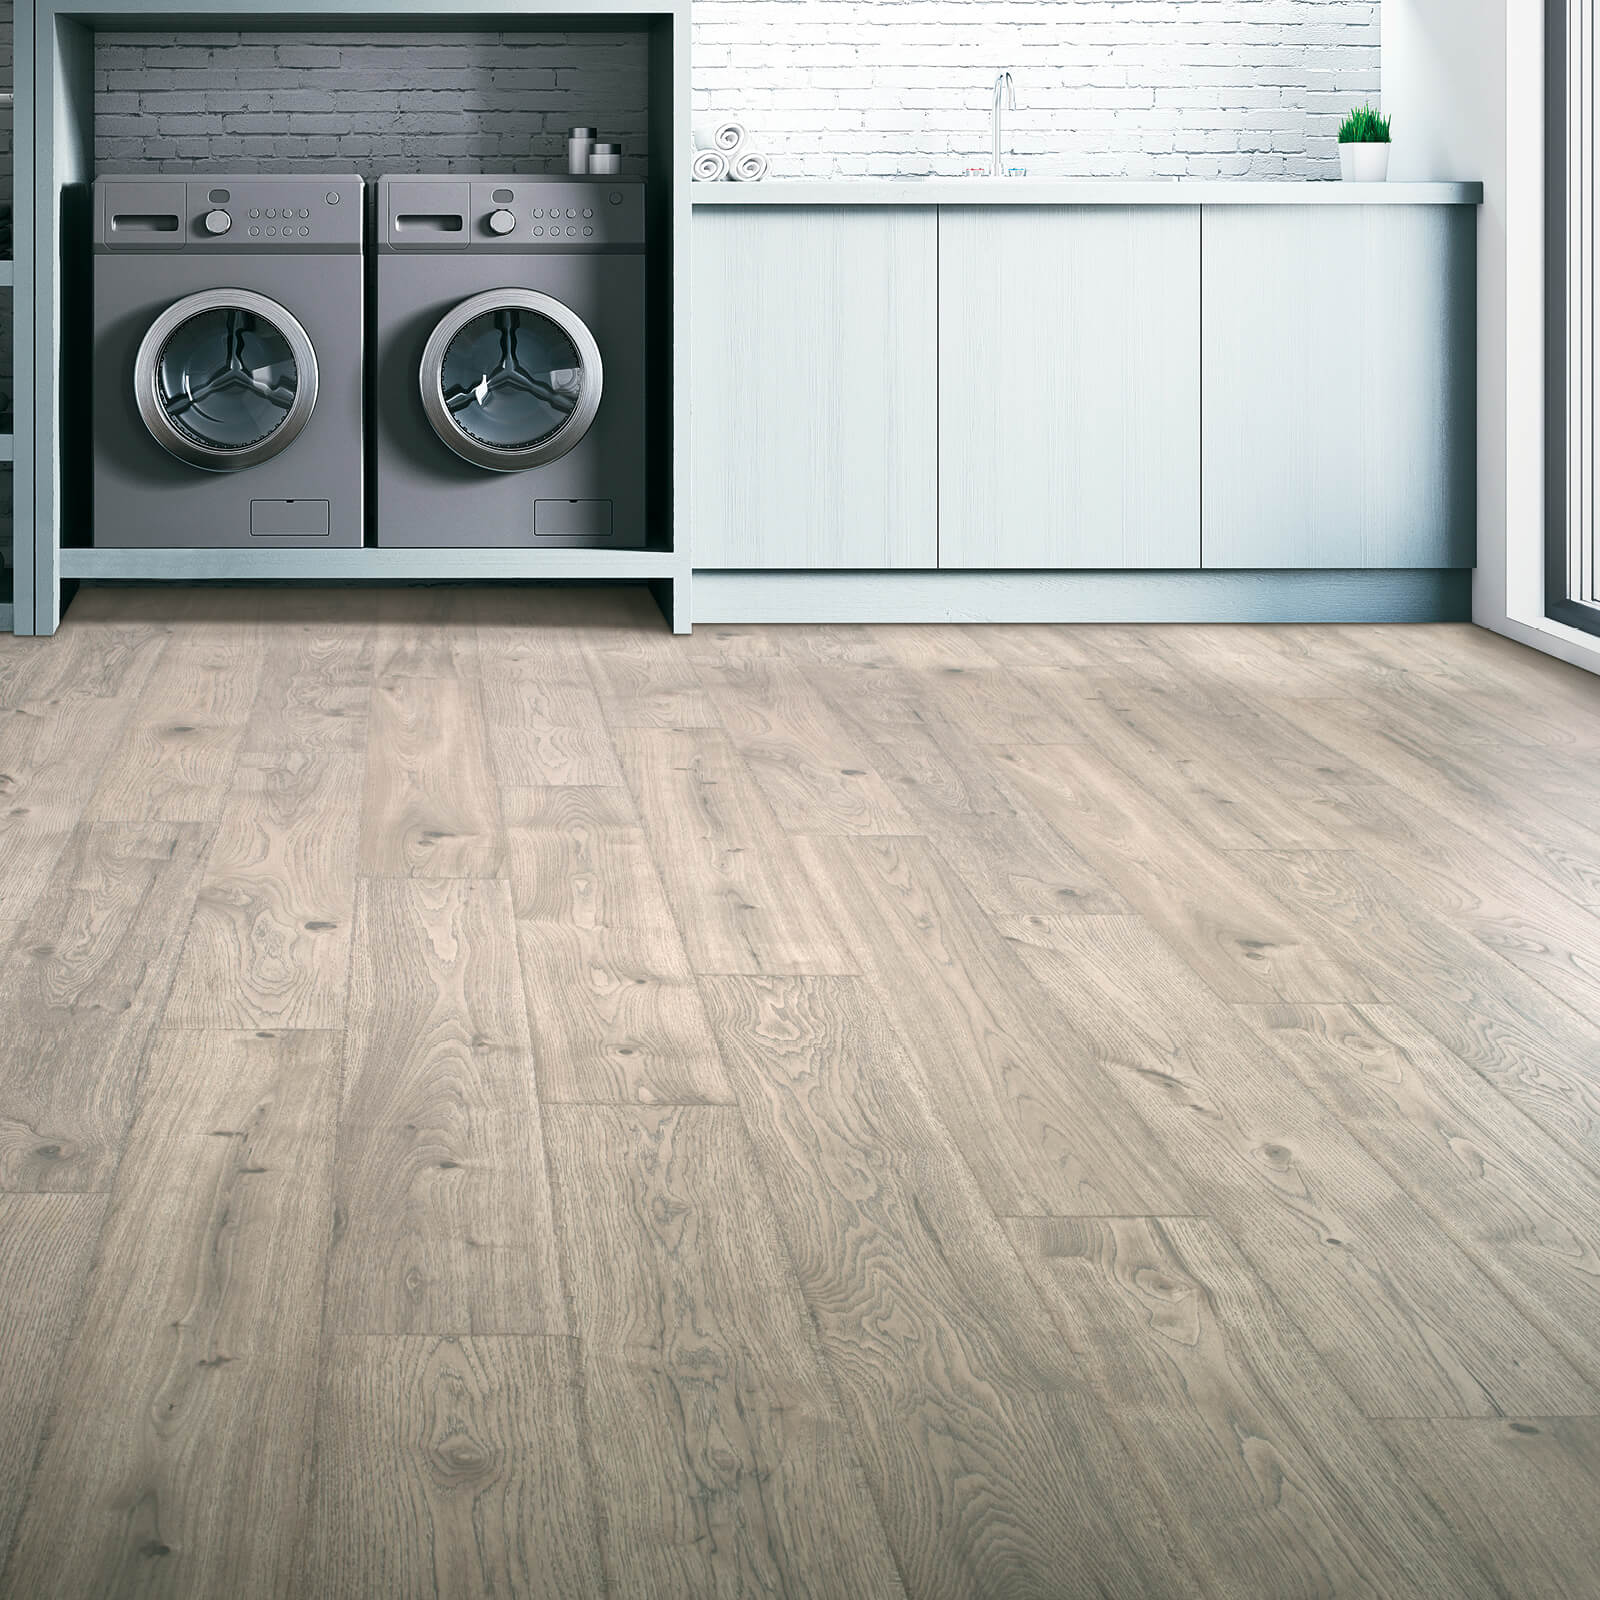 Laundry room laminate flooring | Nampa Floors